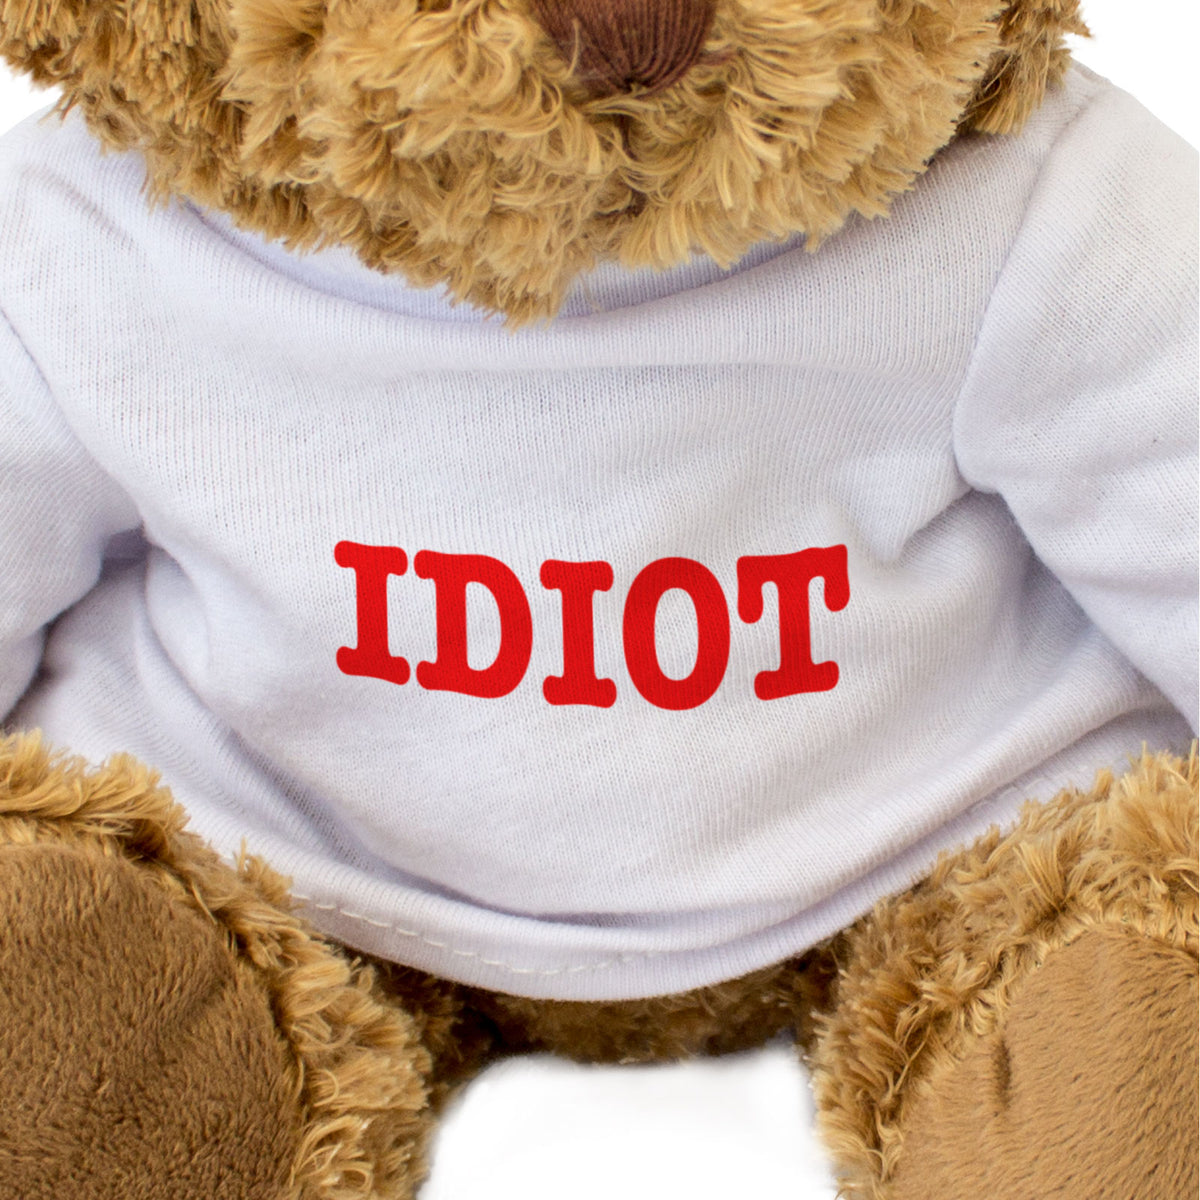 Idiot - Teddy Bear